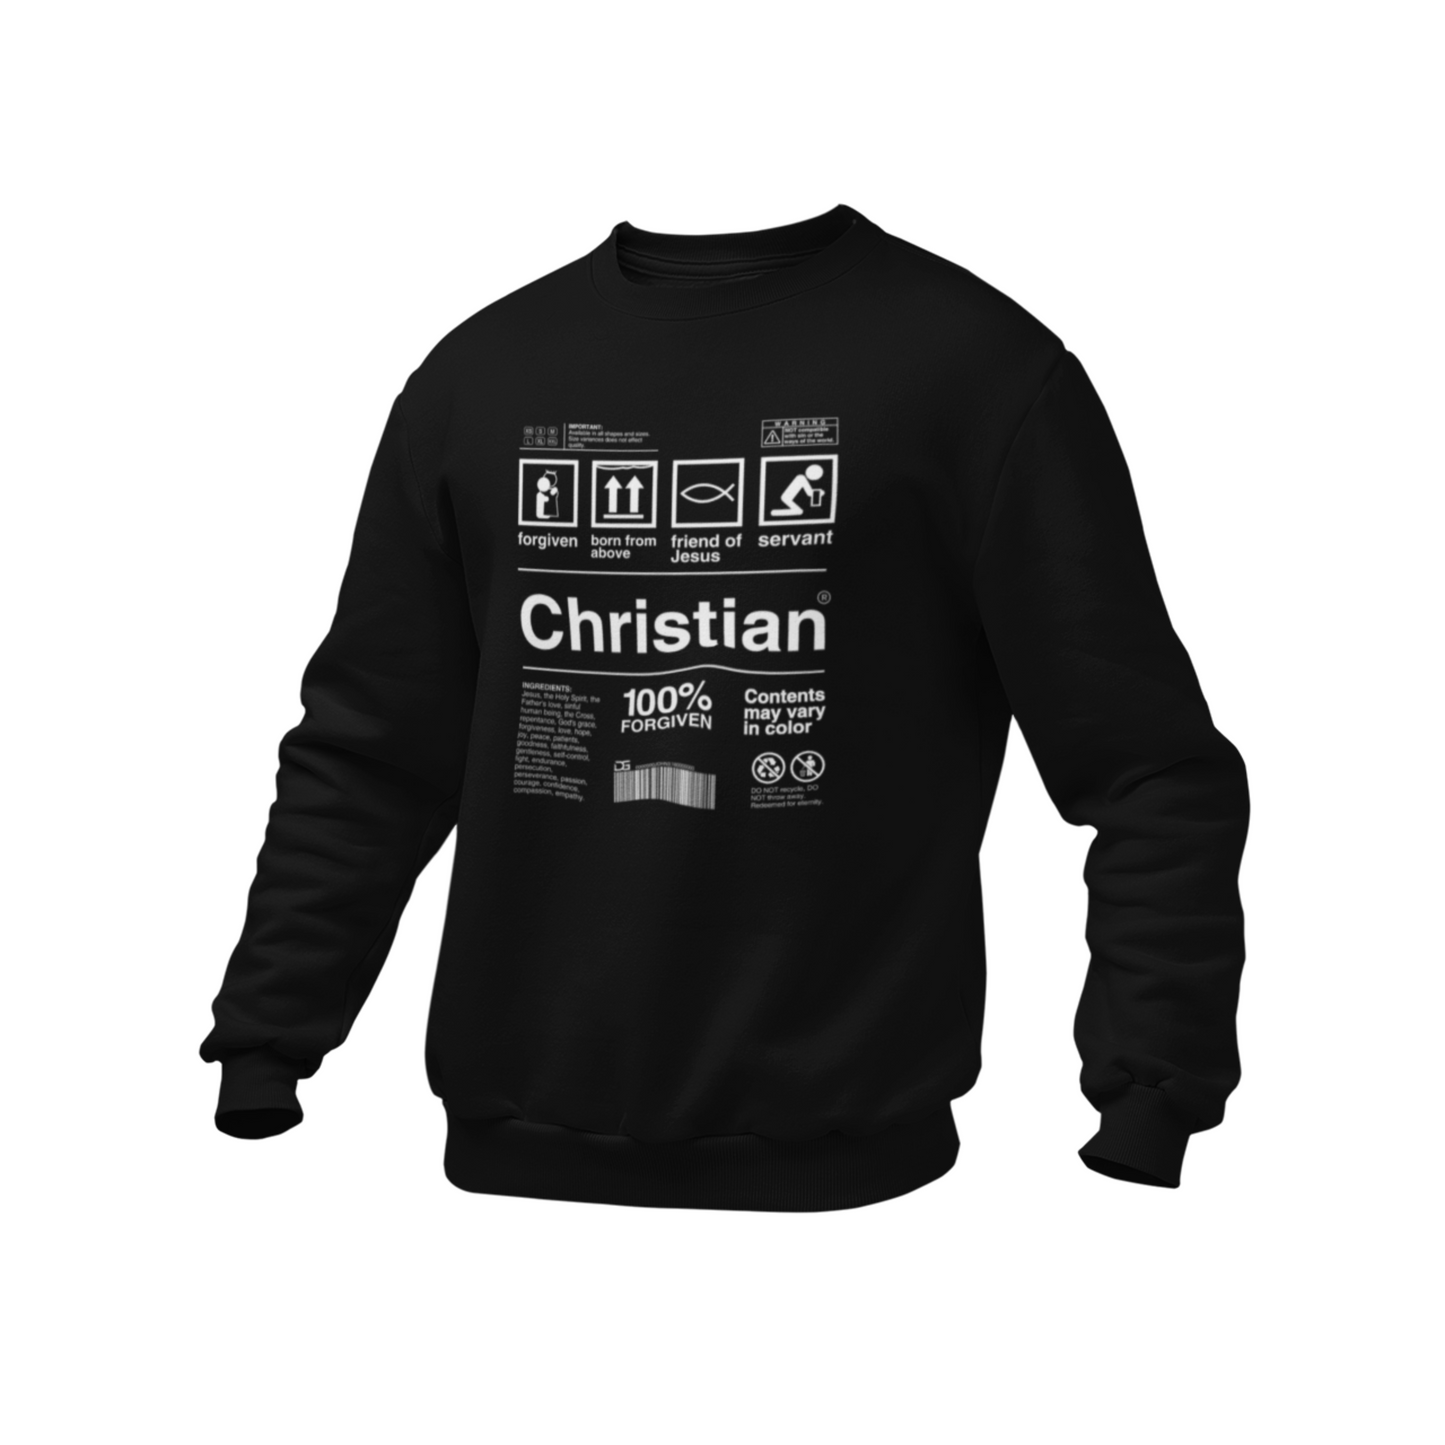 Christian (R). Sweatshirt.